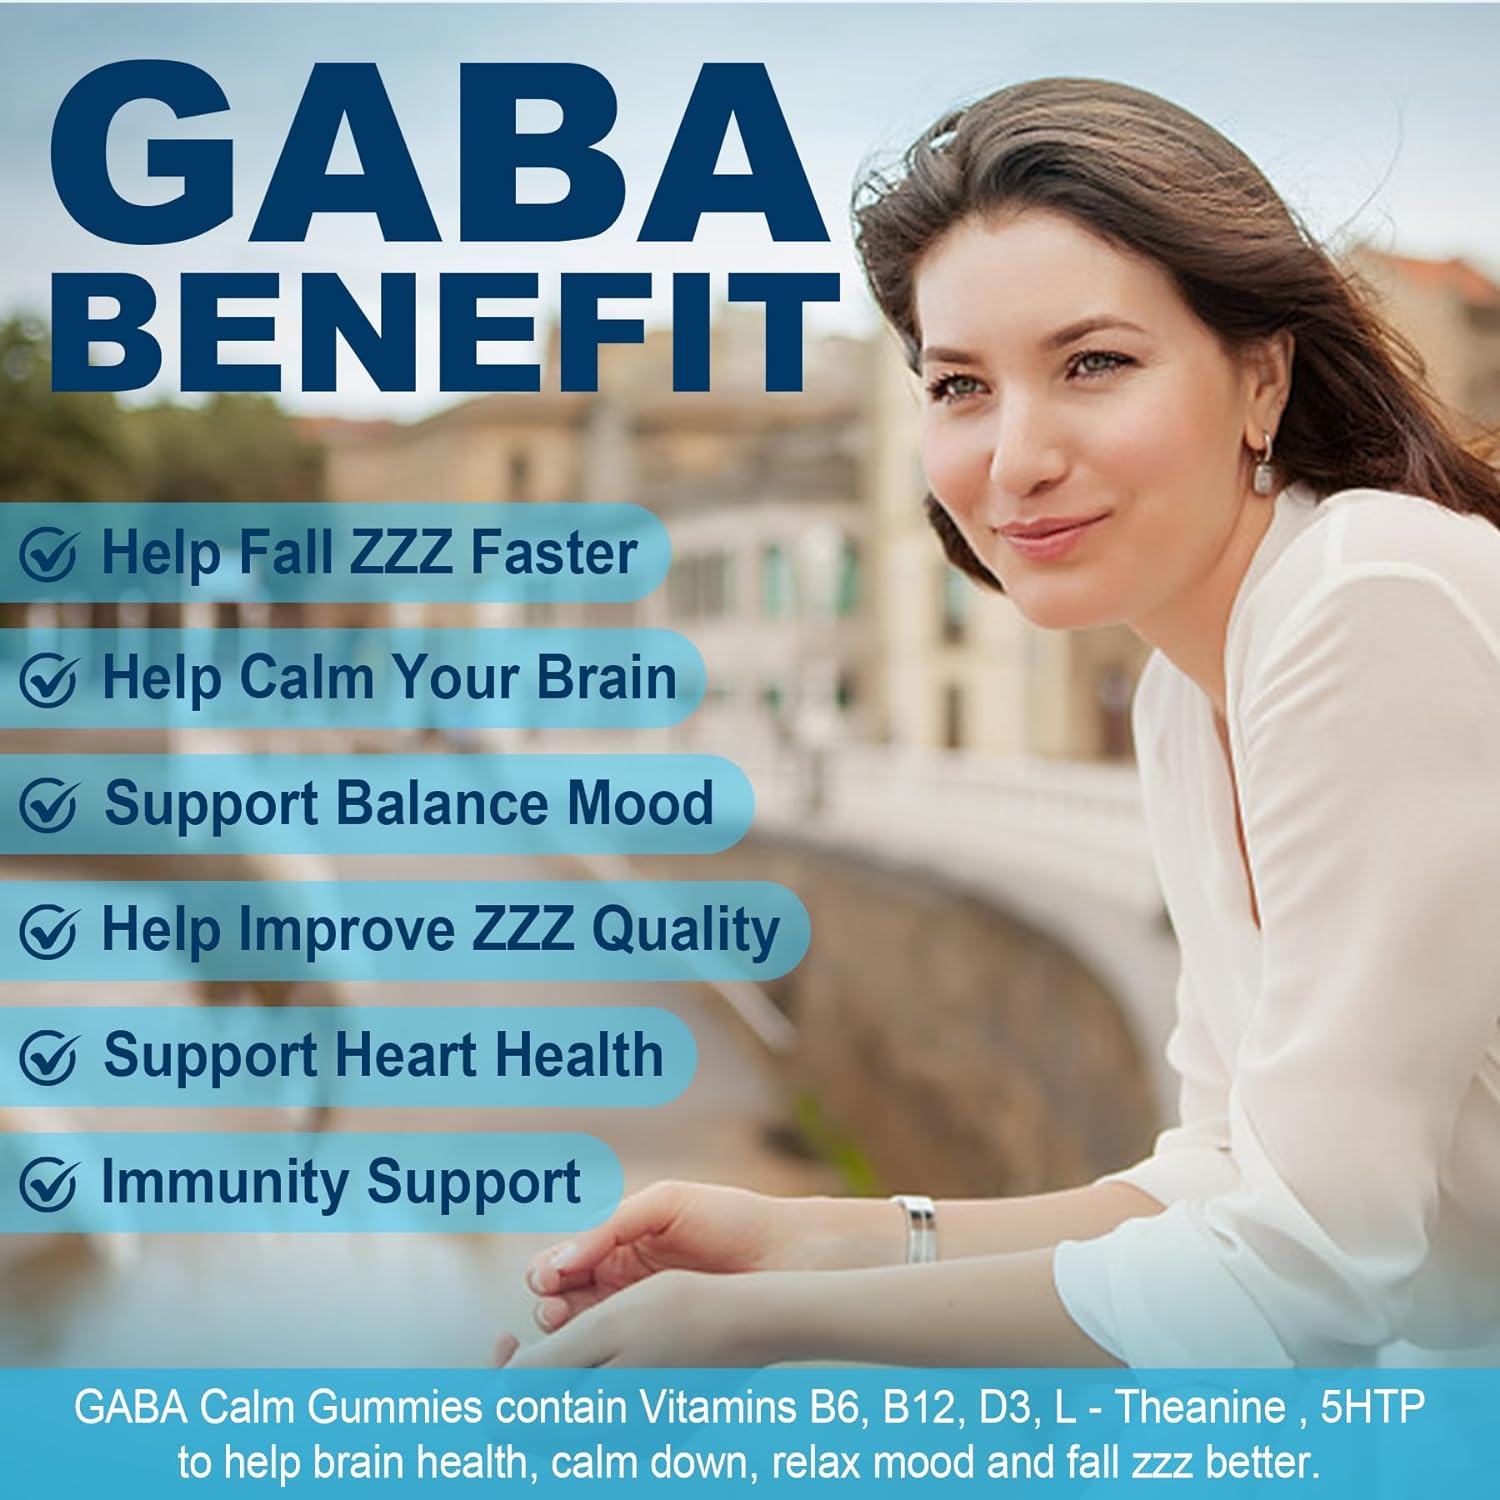 GABA Gummies 500 mg - Sugar-Free Calm Gummies with L Theanine, 5-HTP, Vitamins D3, B12, Ashwagandha, Melatonin-Free for Brain Calm, Mood, Zzz Better, GABA Supplement for Adult, Blueberry Flavor, Vegan : Health & Household